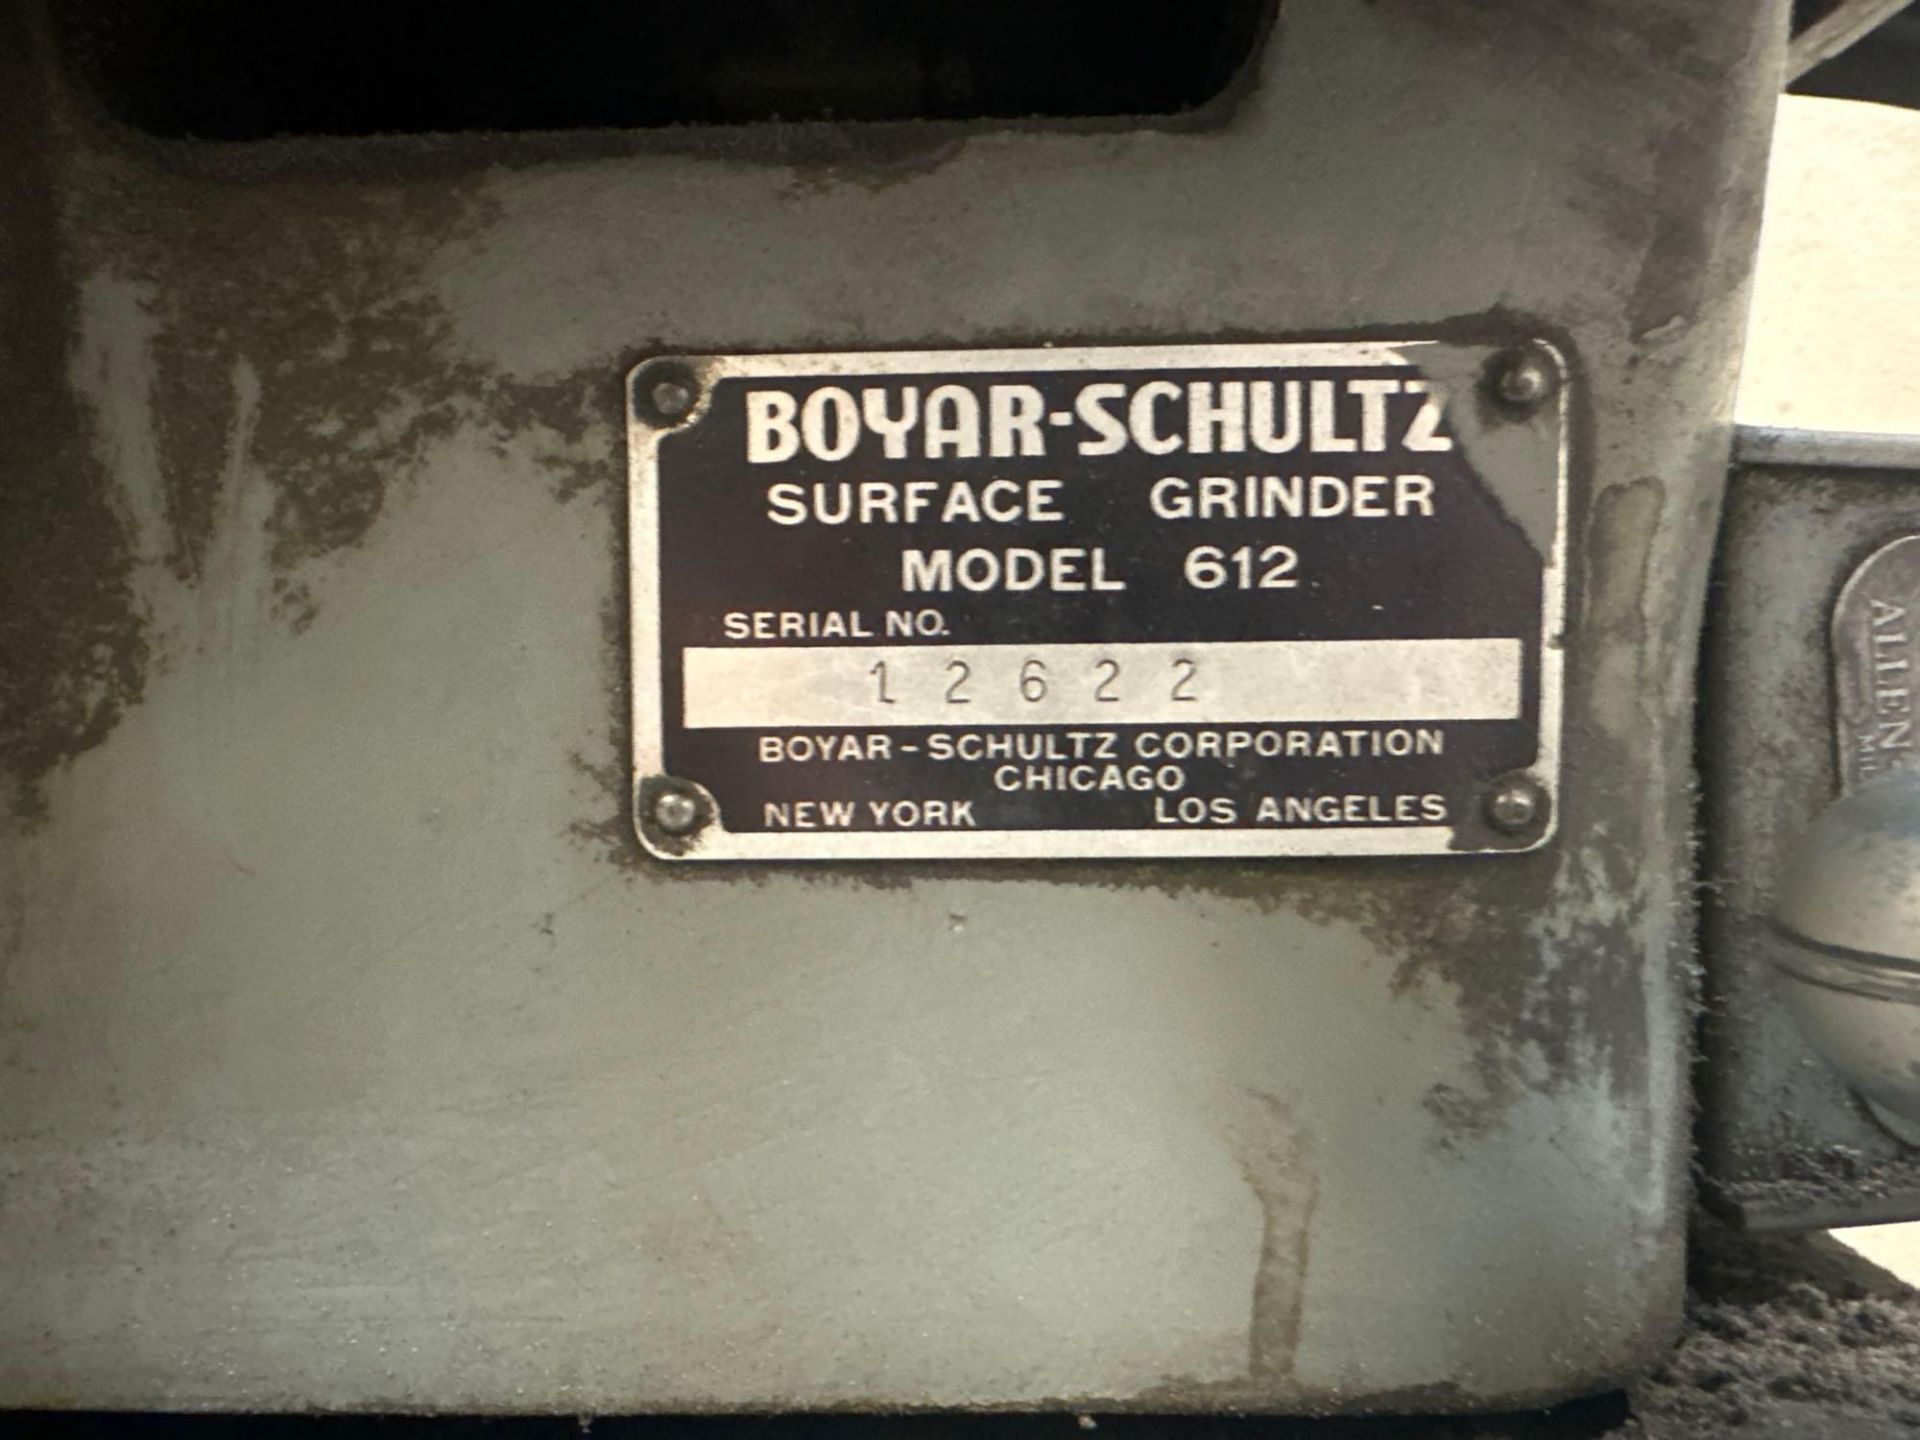 Boyar-Schultz 612 Surface Grinder w/ 6”x12” Magna-Lock Magnetic Chuck, s/n 12622 - Image 8 of 8